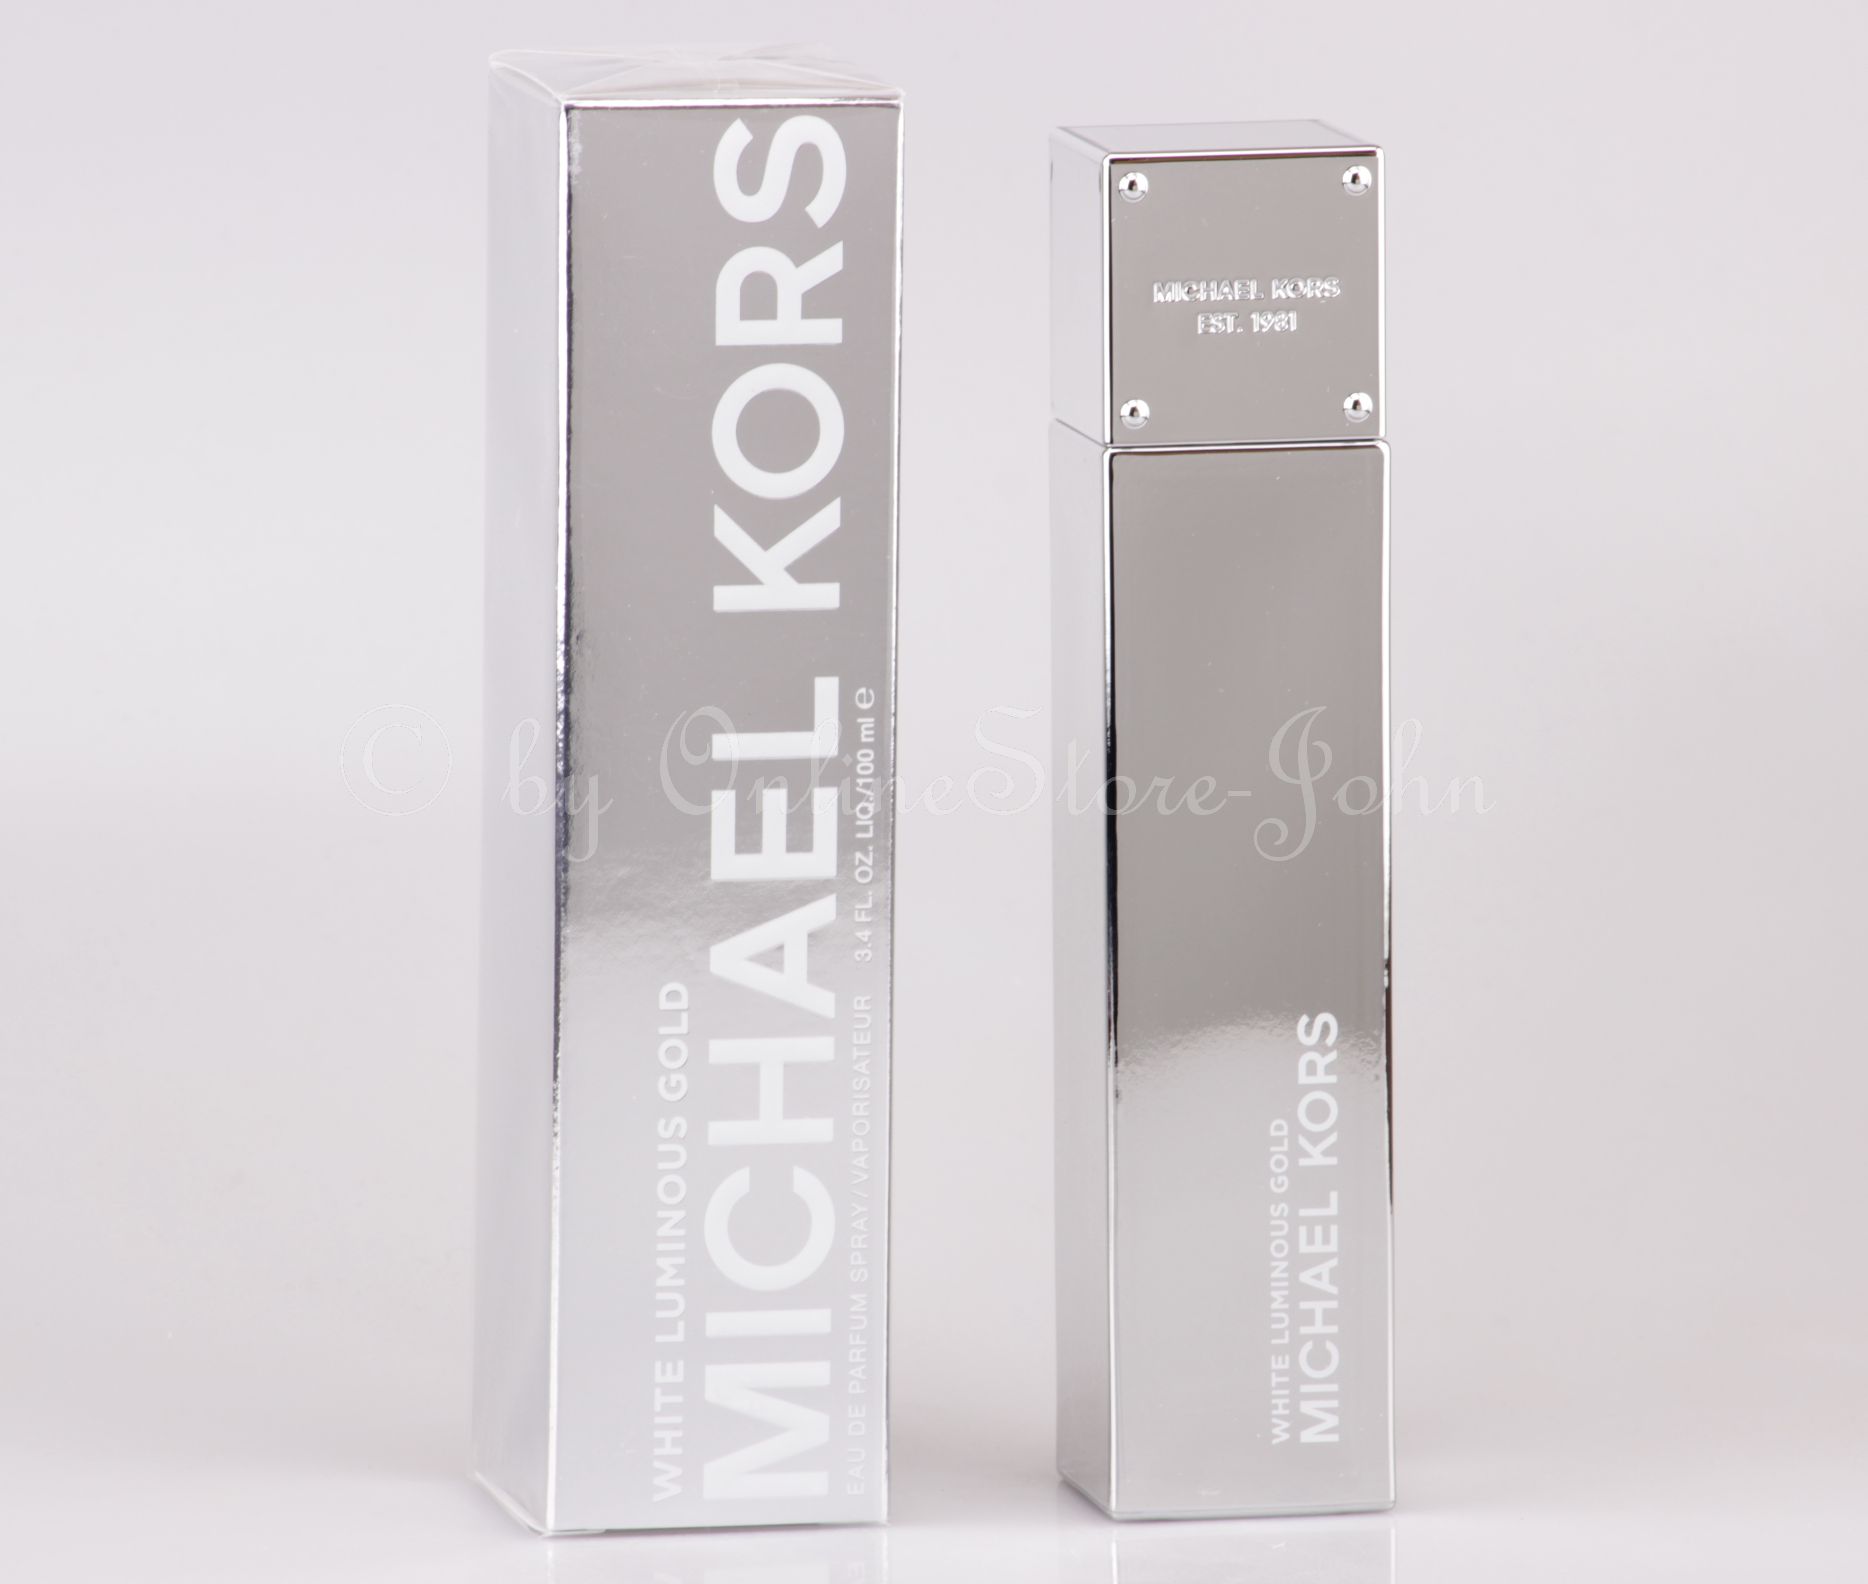 michael kors silver perfume